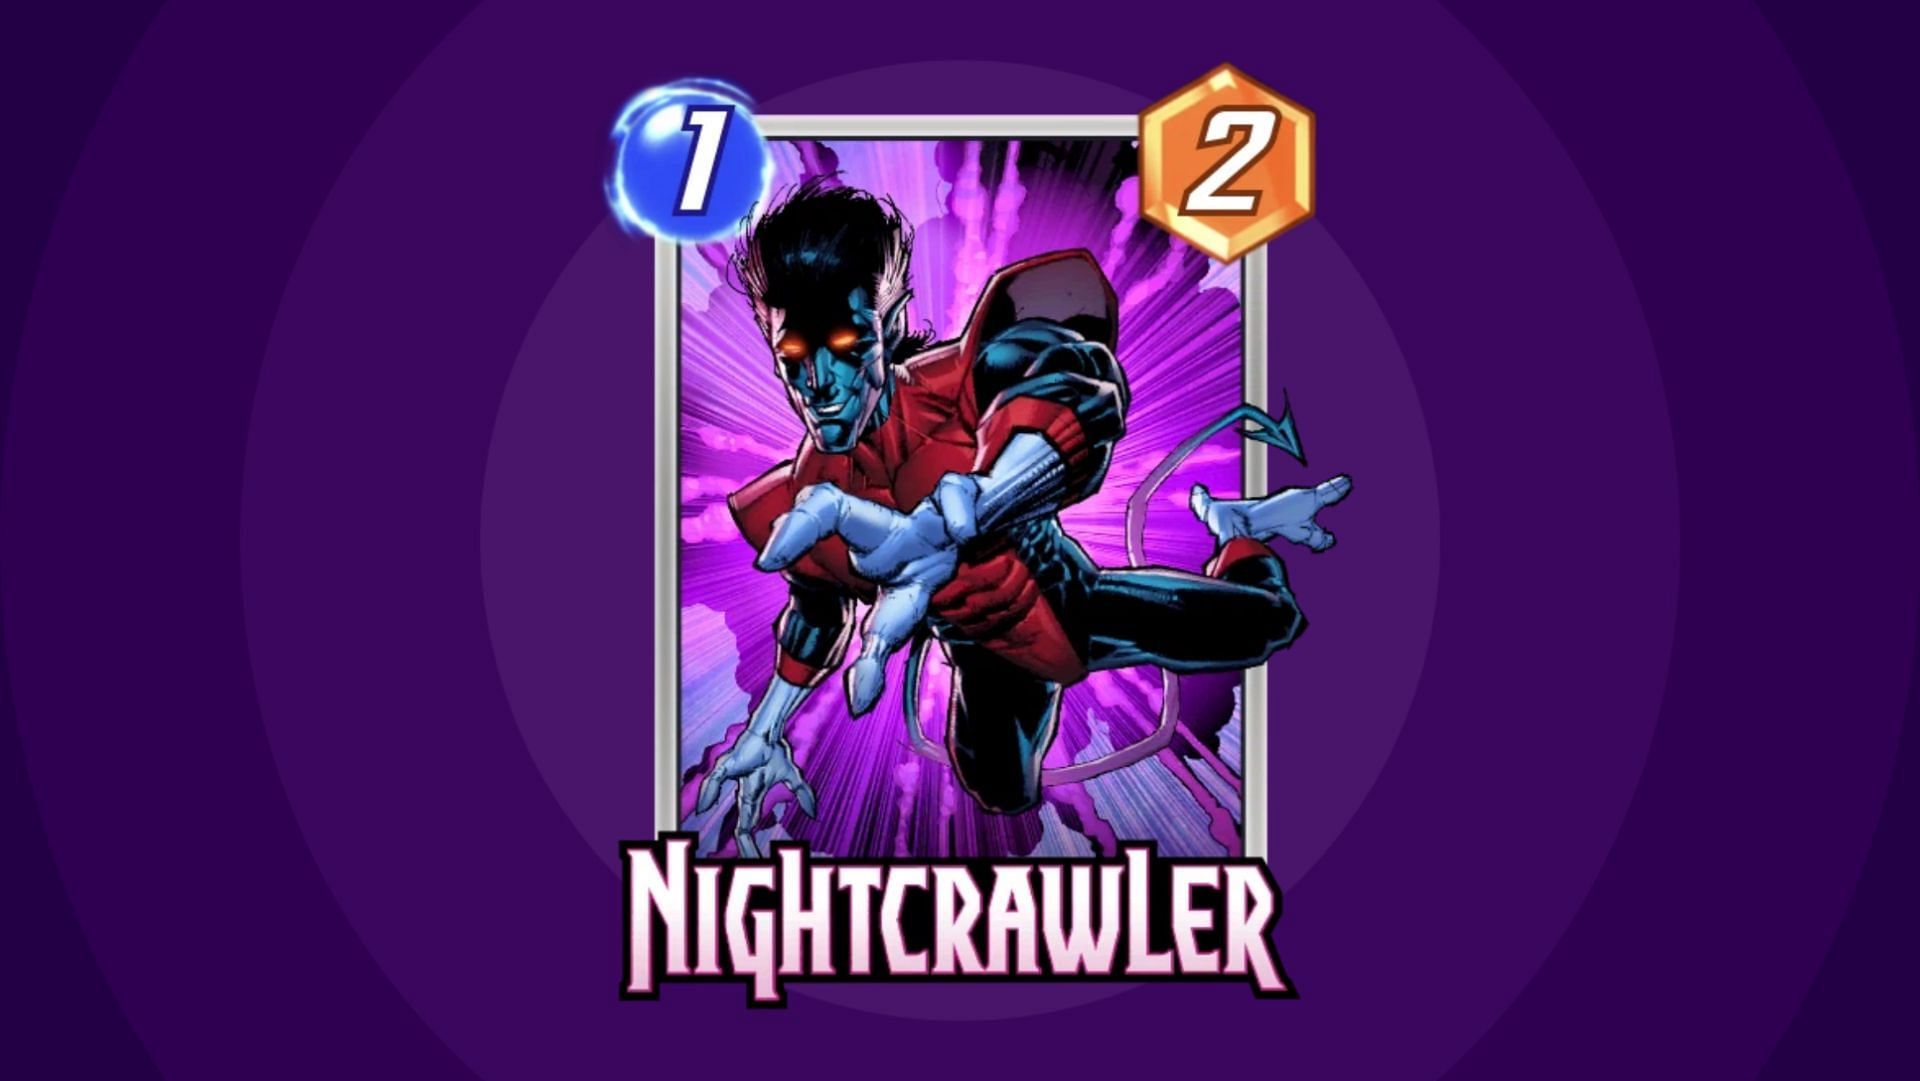 In-game card art of Nightcrawler (Image via marvelsnap.io)